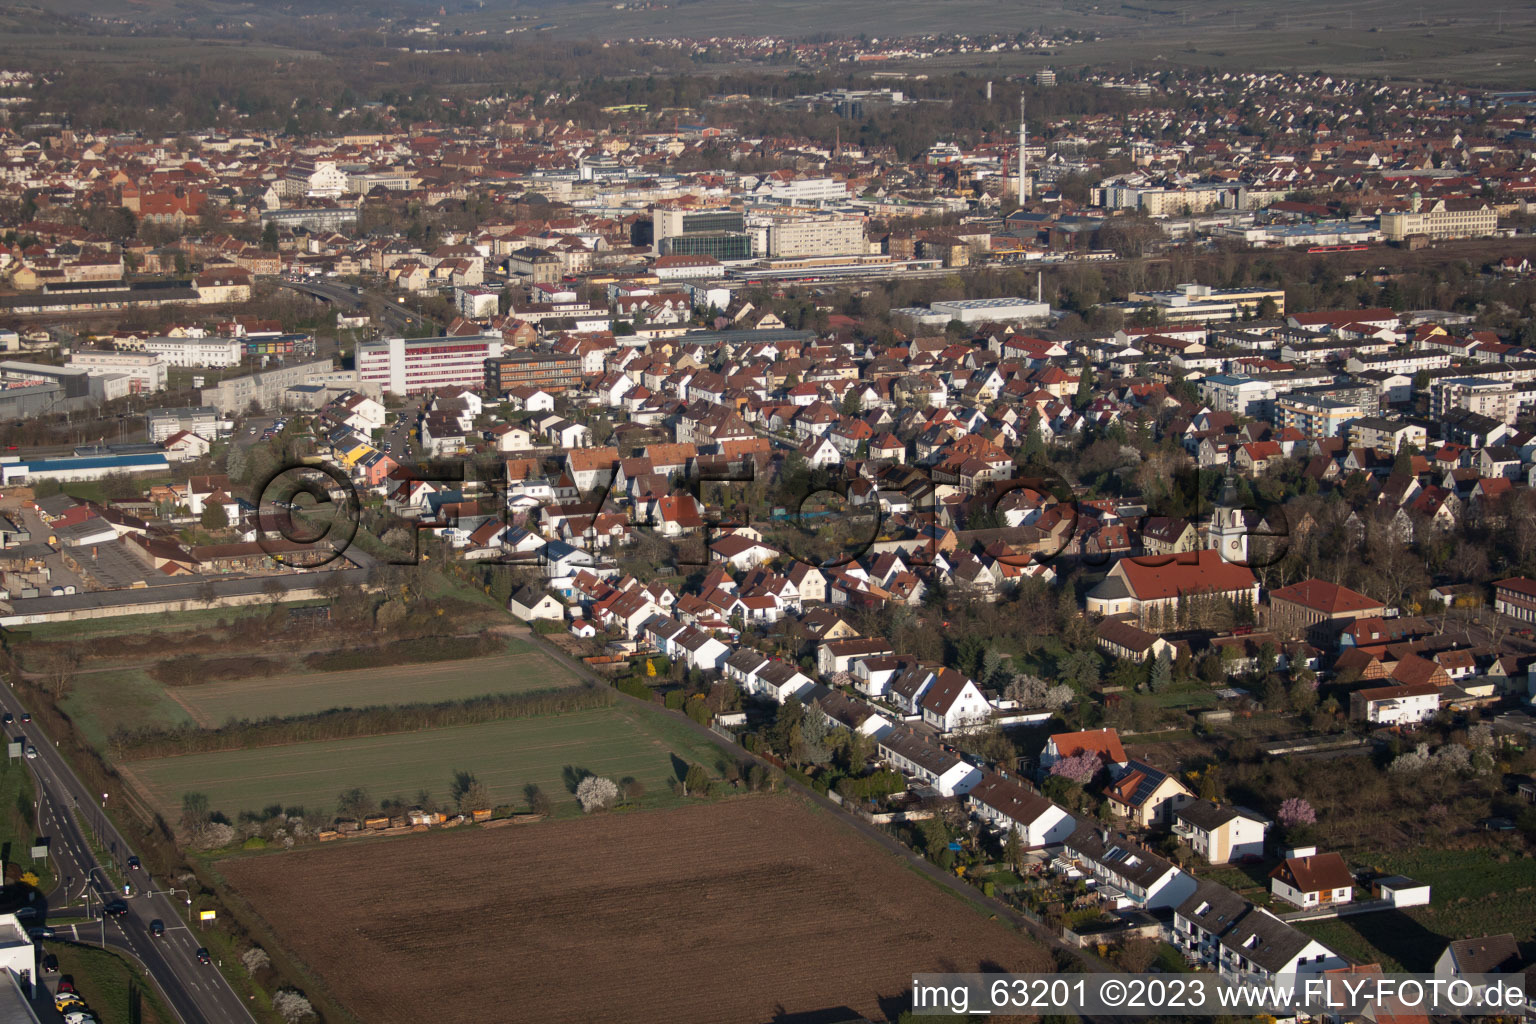 District Queichheim in Landau in der Pfalz in the state Rhineland-Palatinate, Germany viewn from the air